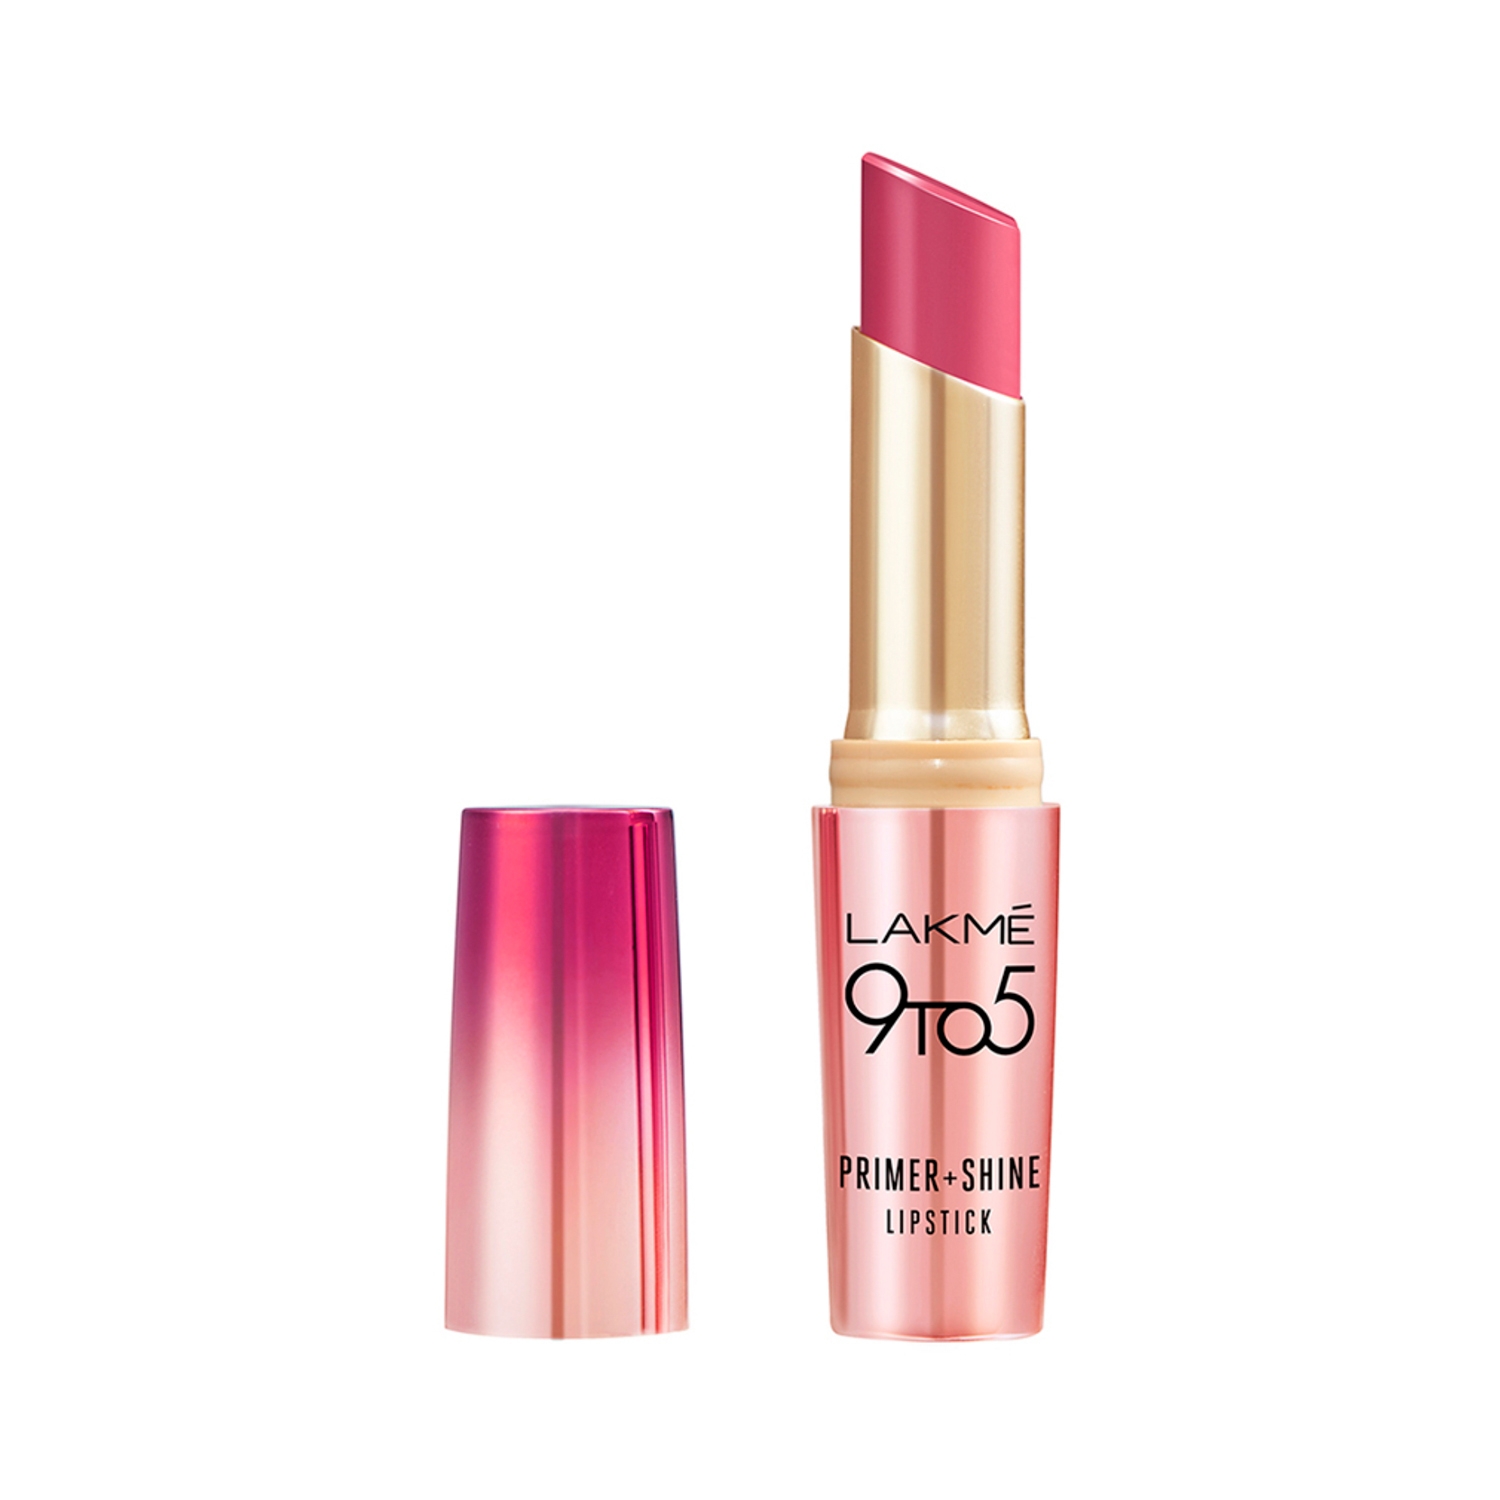 Lakme | Lakme 9 To 5 Primer + Shine Lipstick - Pink Dream (3.6g)